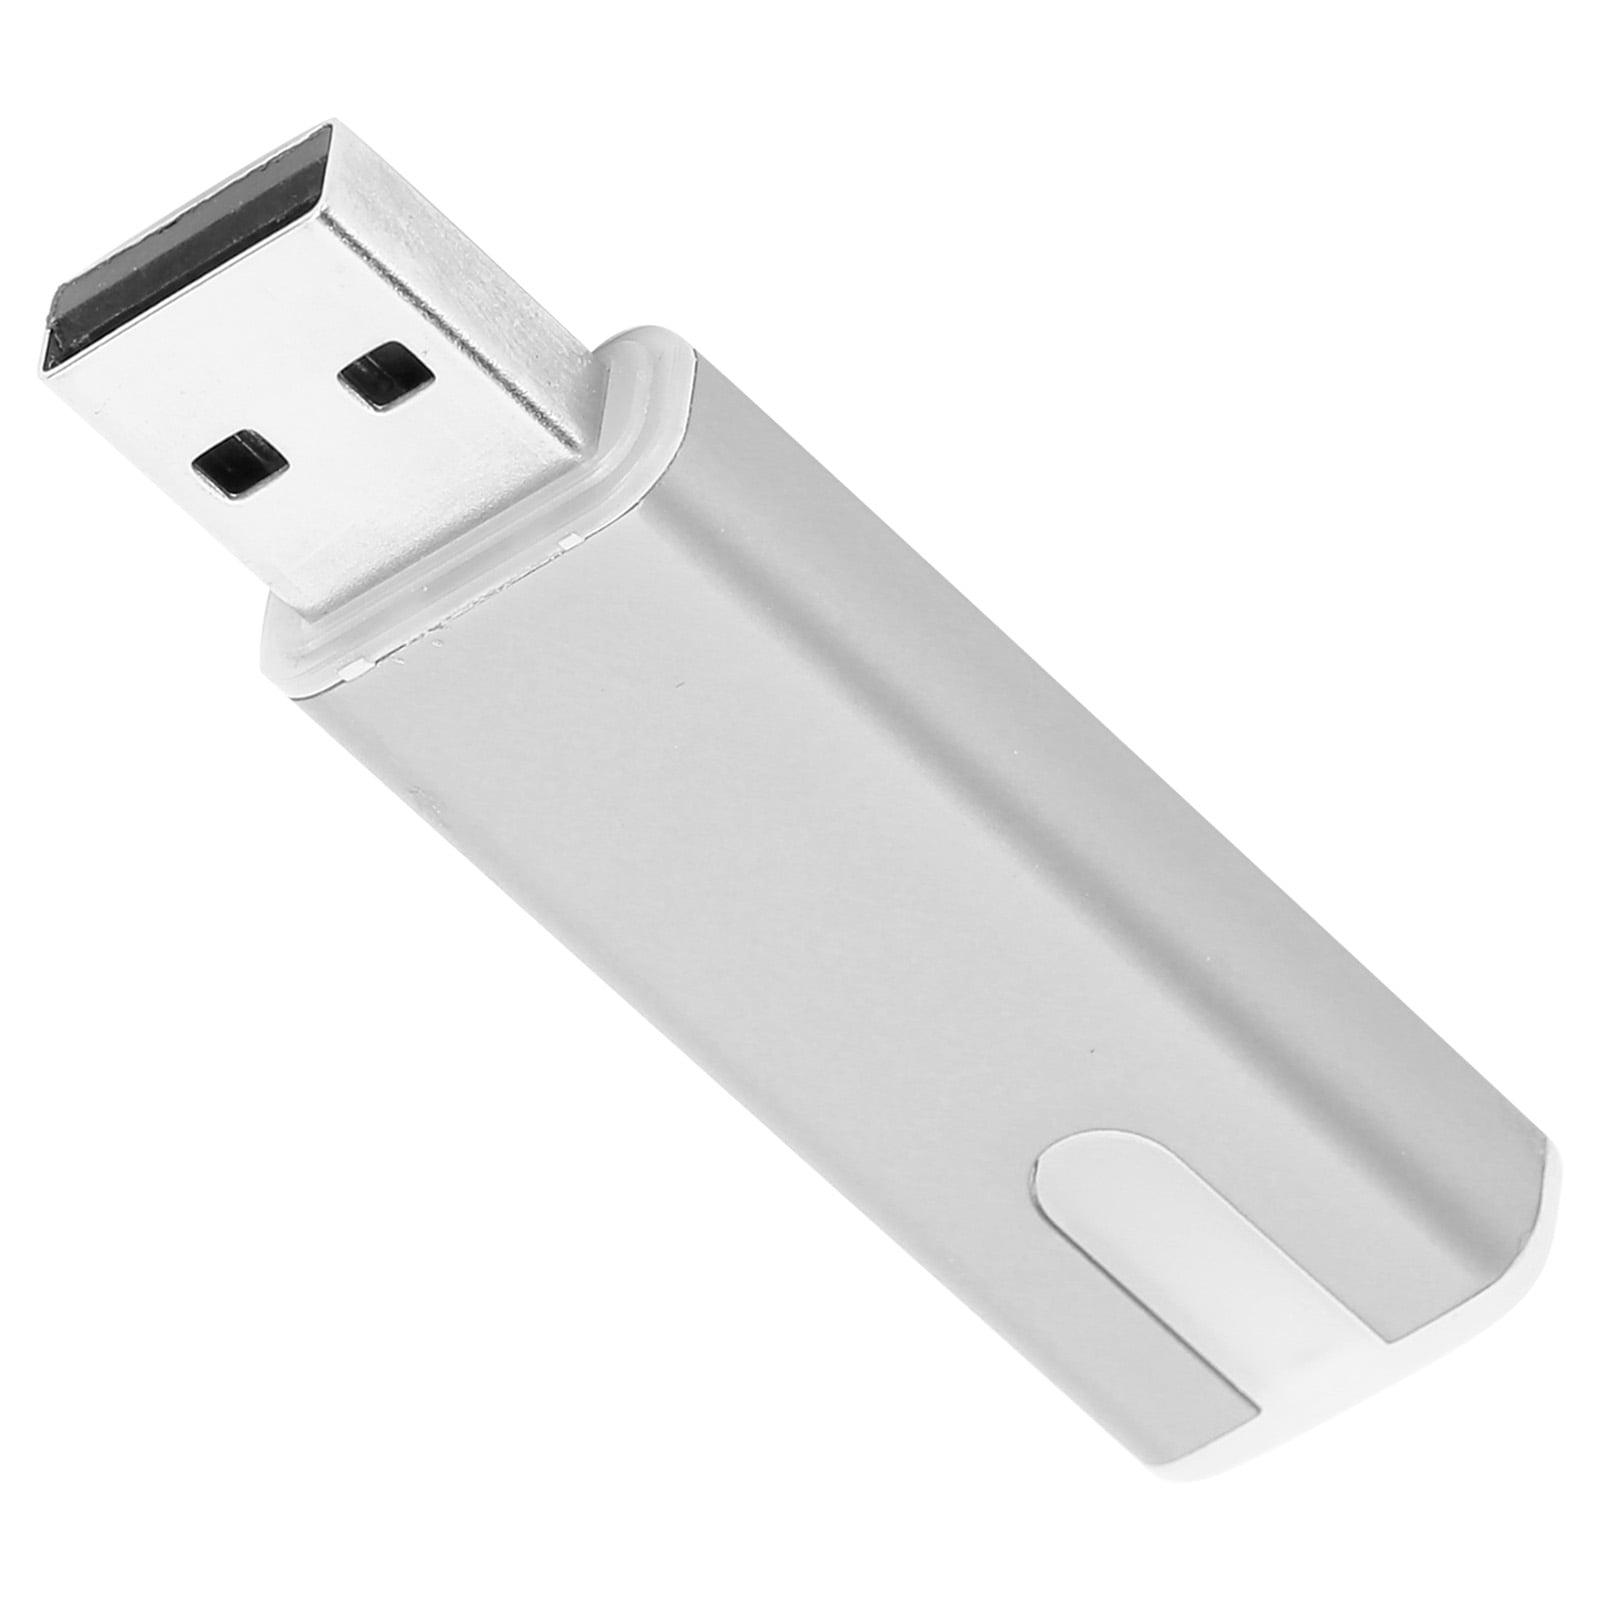 Portable U Disk, Simple USB Drive, Upper Design For Family Outdoors Home Friends 128GB - Walmart.com